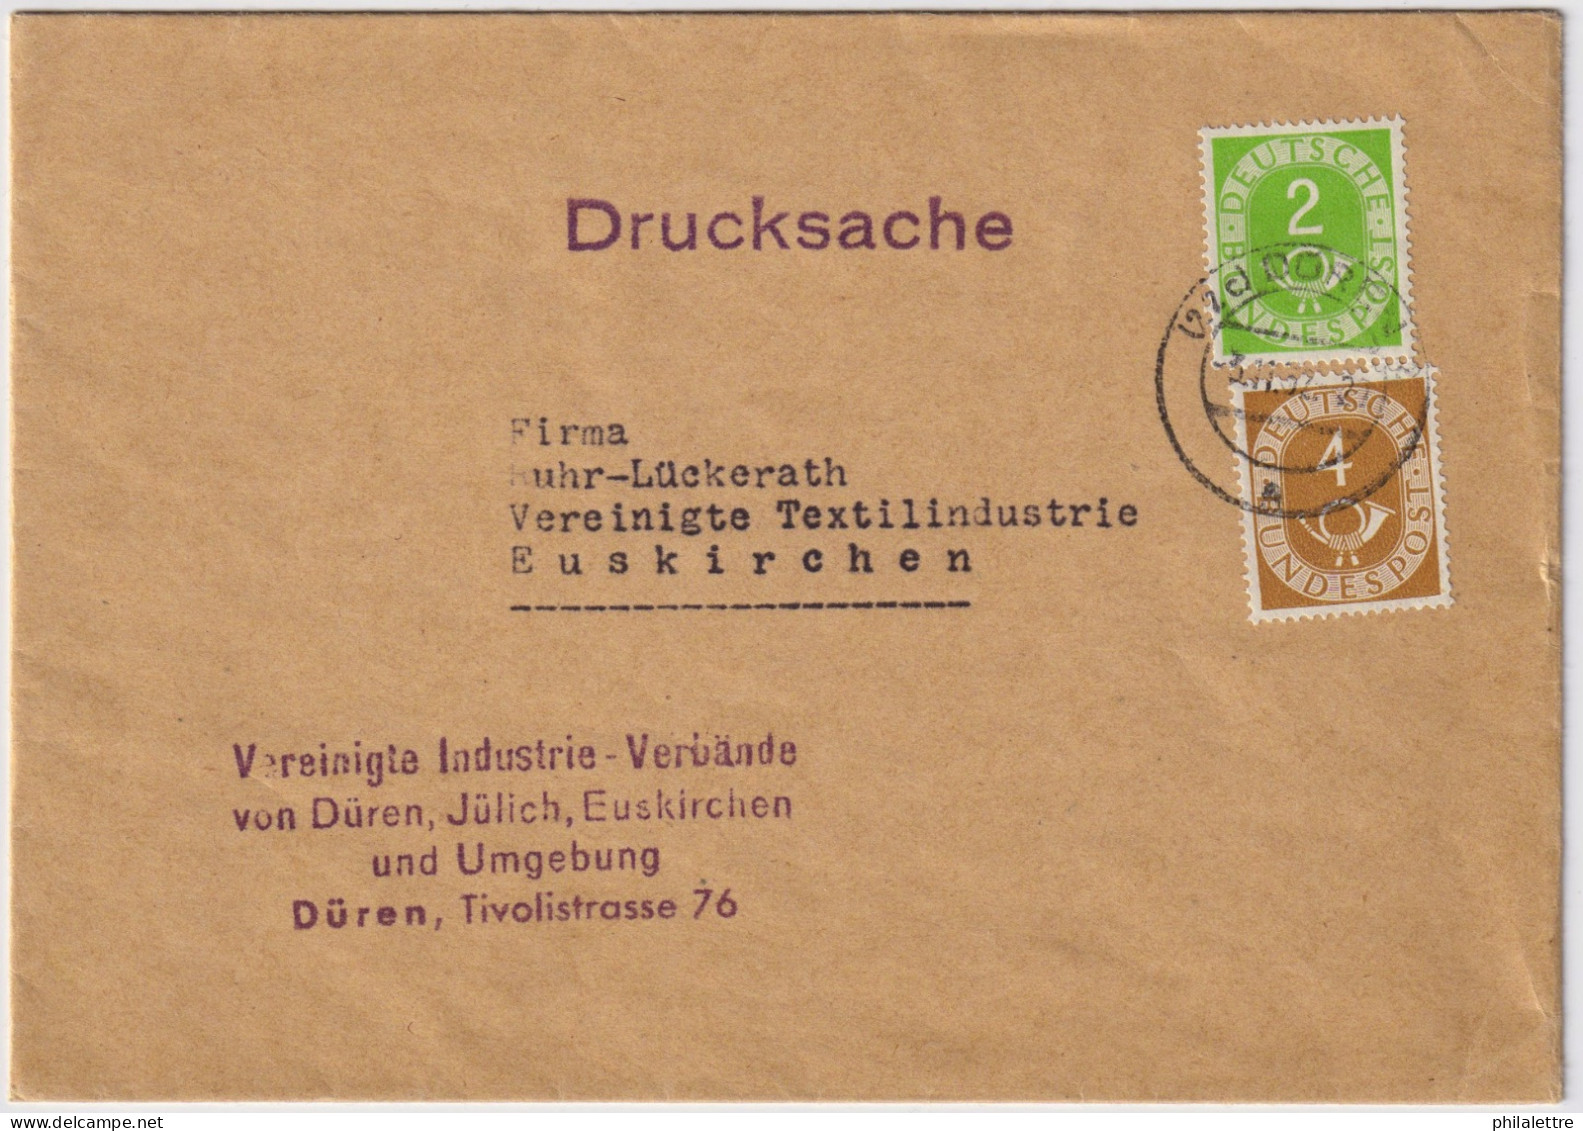 ALLEMAGNE / GERMANY - 1953 - Mi.123 & Mi.124 2pf. & 4pf. On Printed Matters (Drucksache) Cover From Düren To Euskirchen - Storia Postale